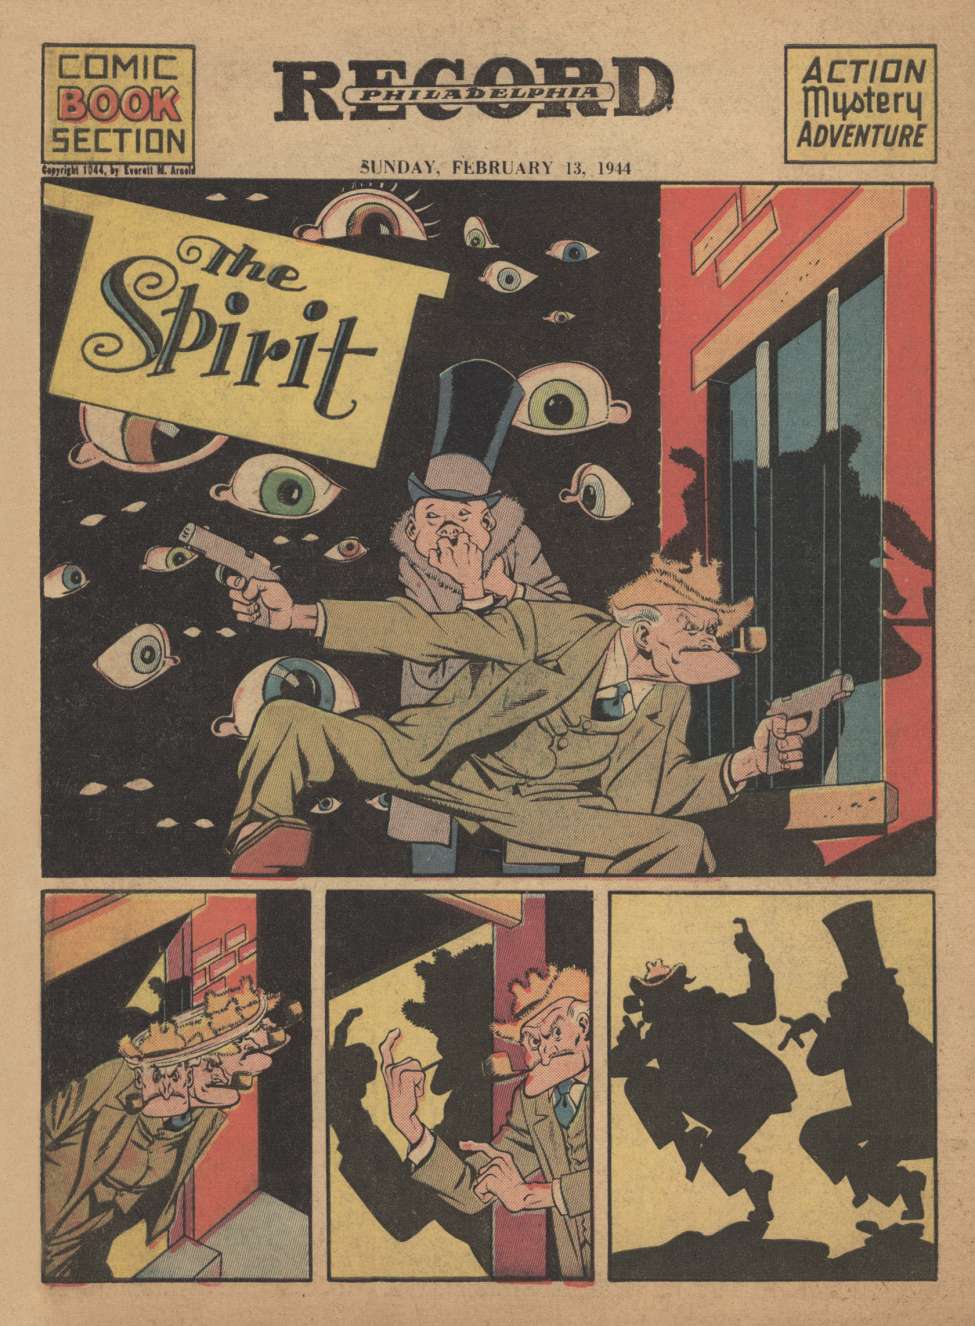 Comic Book Cover For The Spirit (1944-02-13) - Philadelphia Record